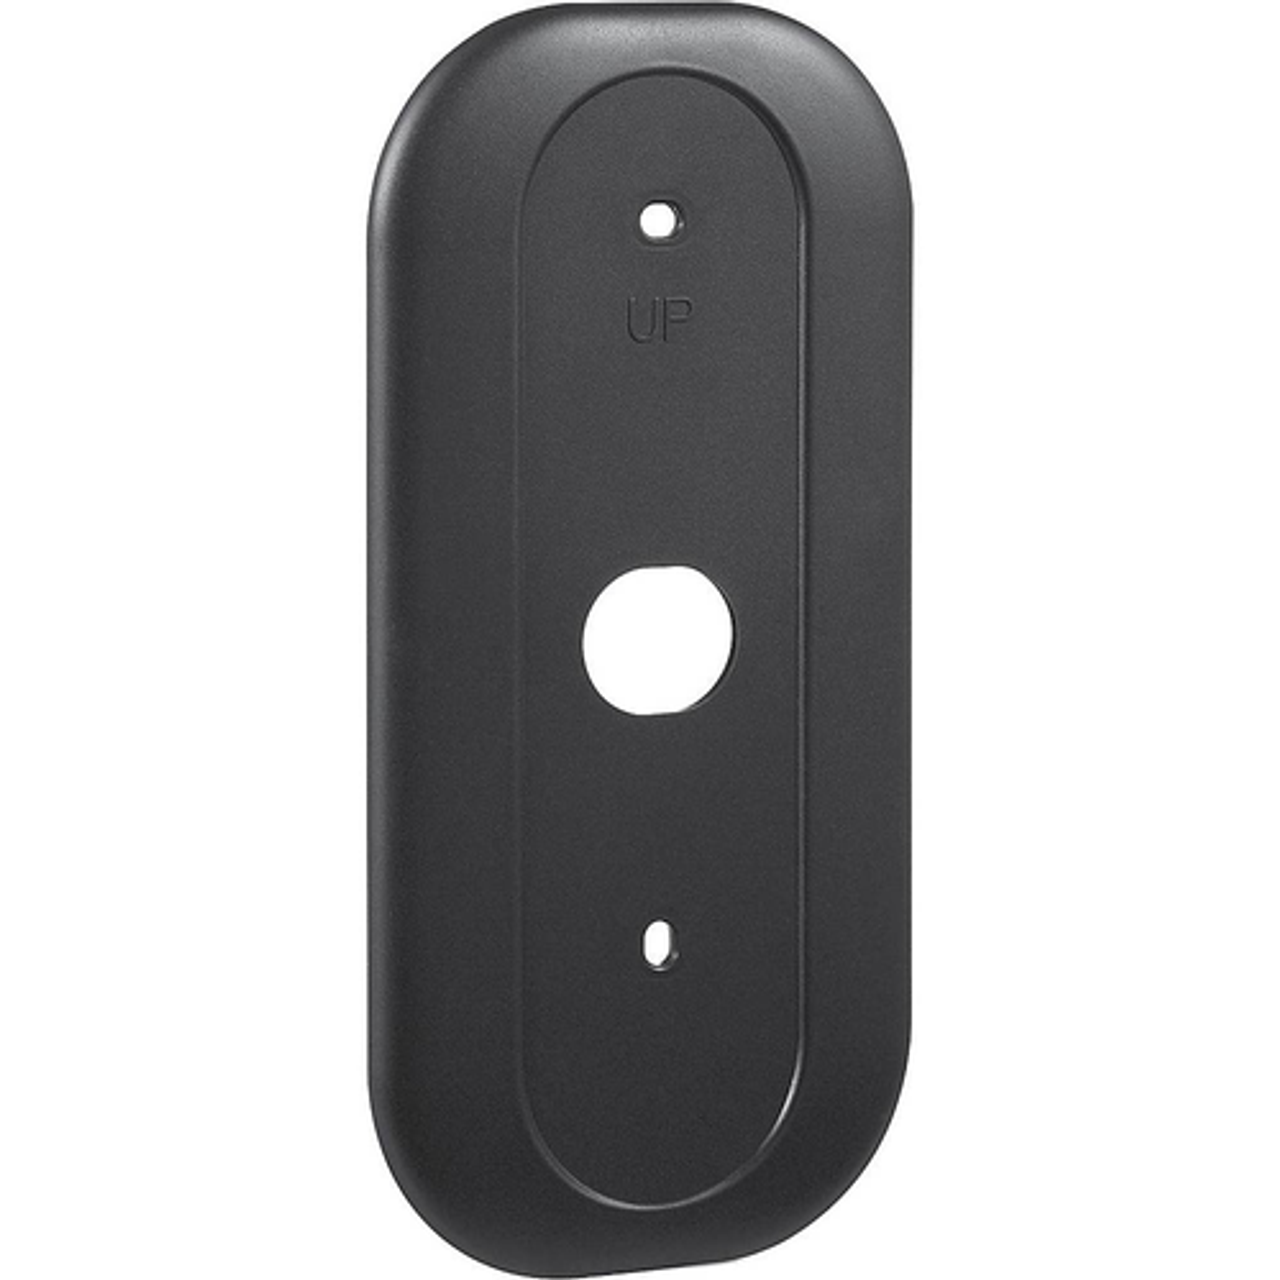 Wasserstein - Wall Plate for Google Nest Doorbell (battery) - Black